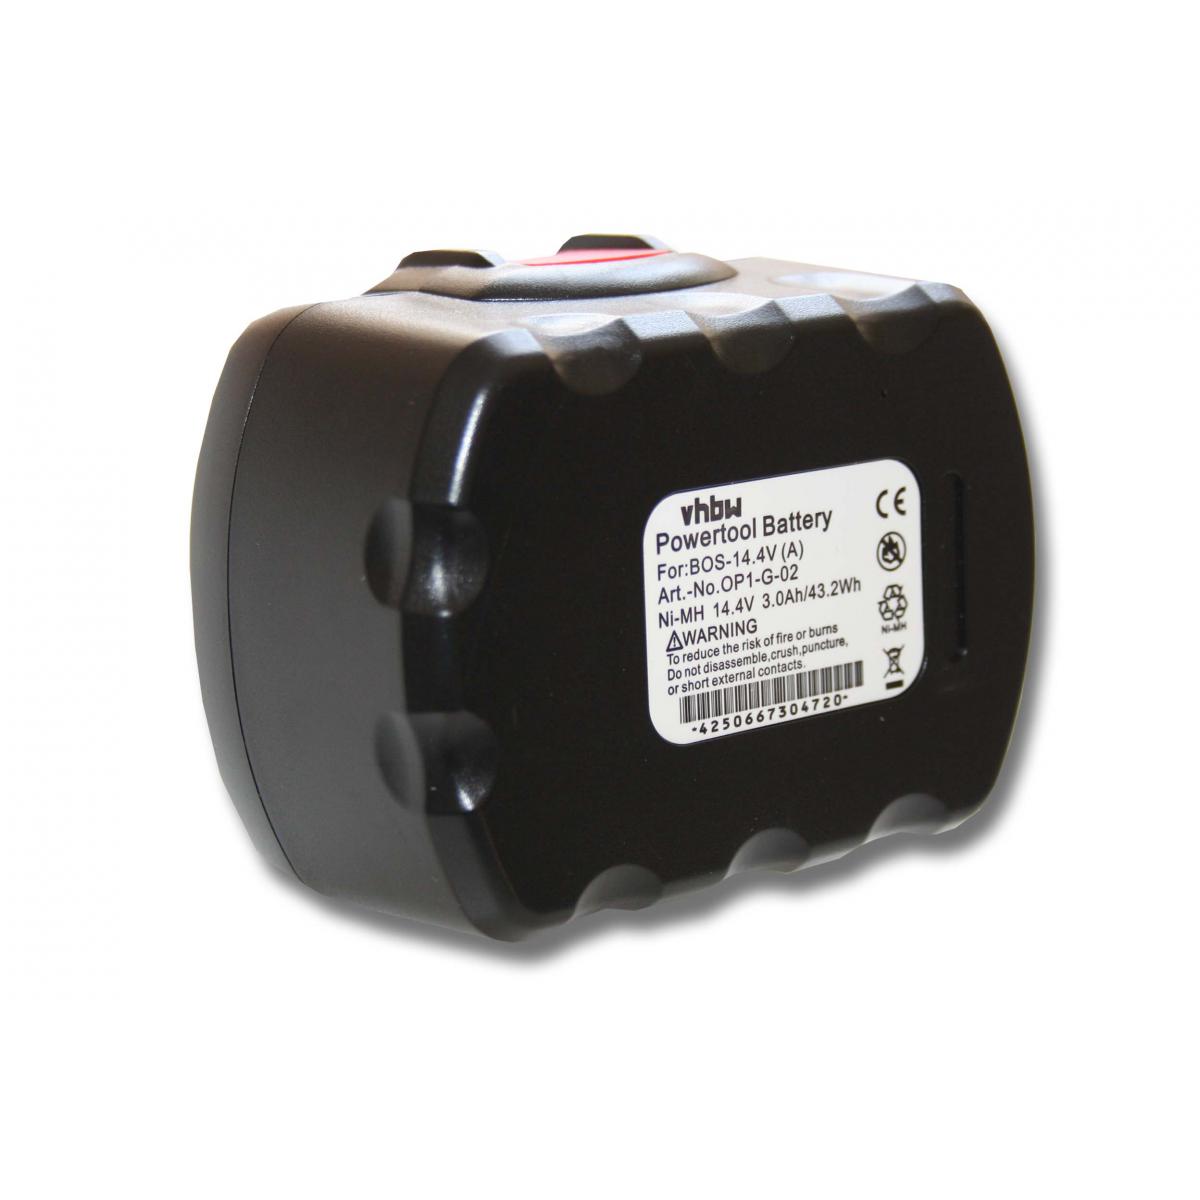 Vhbw - vhbw Batterie compatible avec Bosch PSR 14.4VE-2(/B), PSR1440, PSR1440/B, PST 14.4V, VE-2, VE-2 GSB, VPE-2 outil électrique (3000mAh NiMH 14,4V) - Clouterie